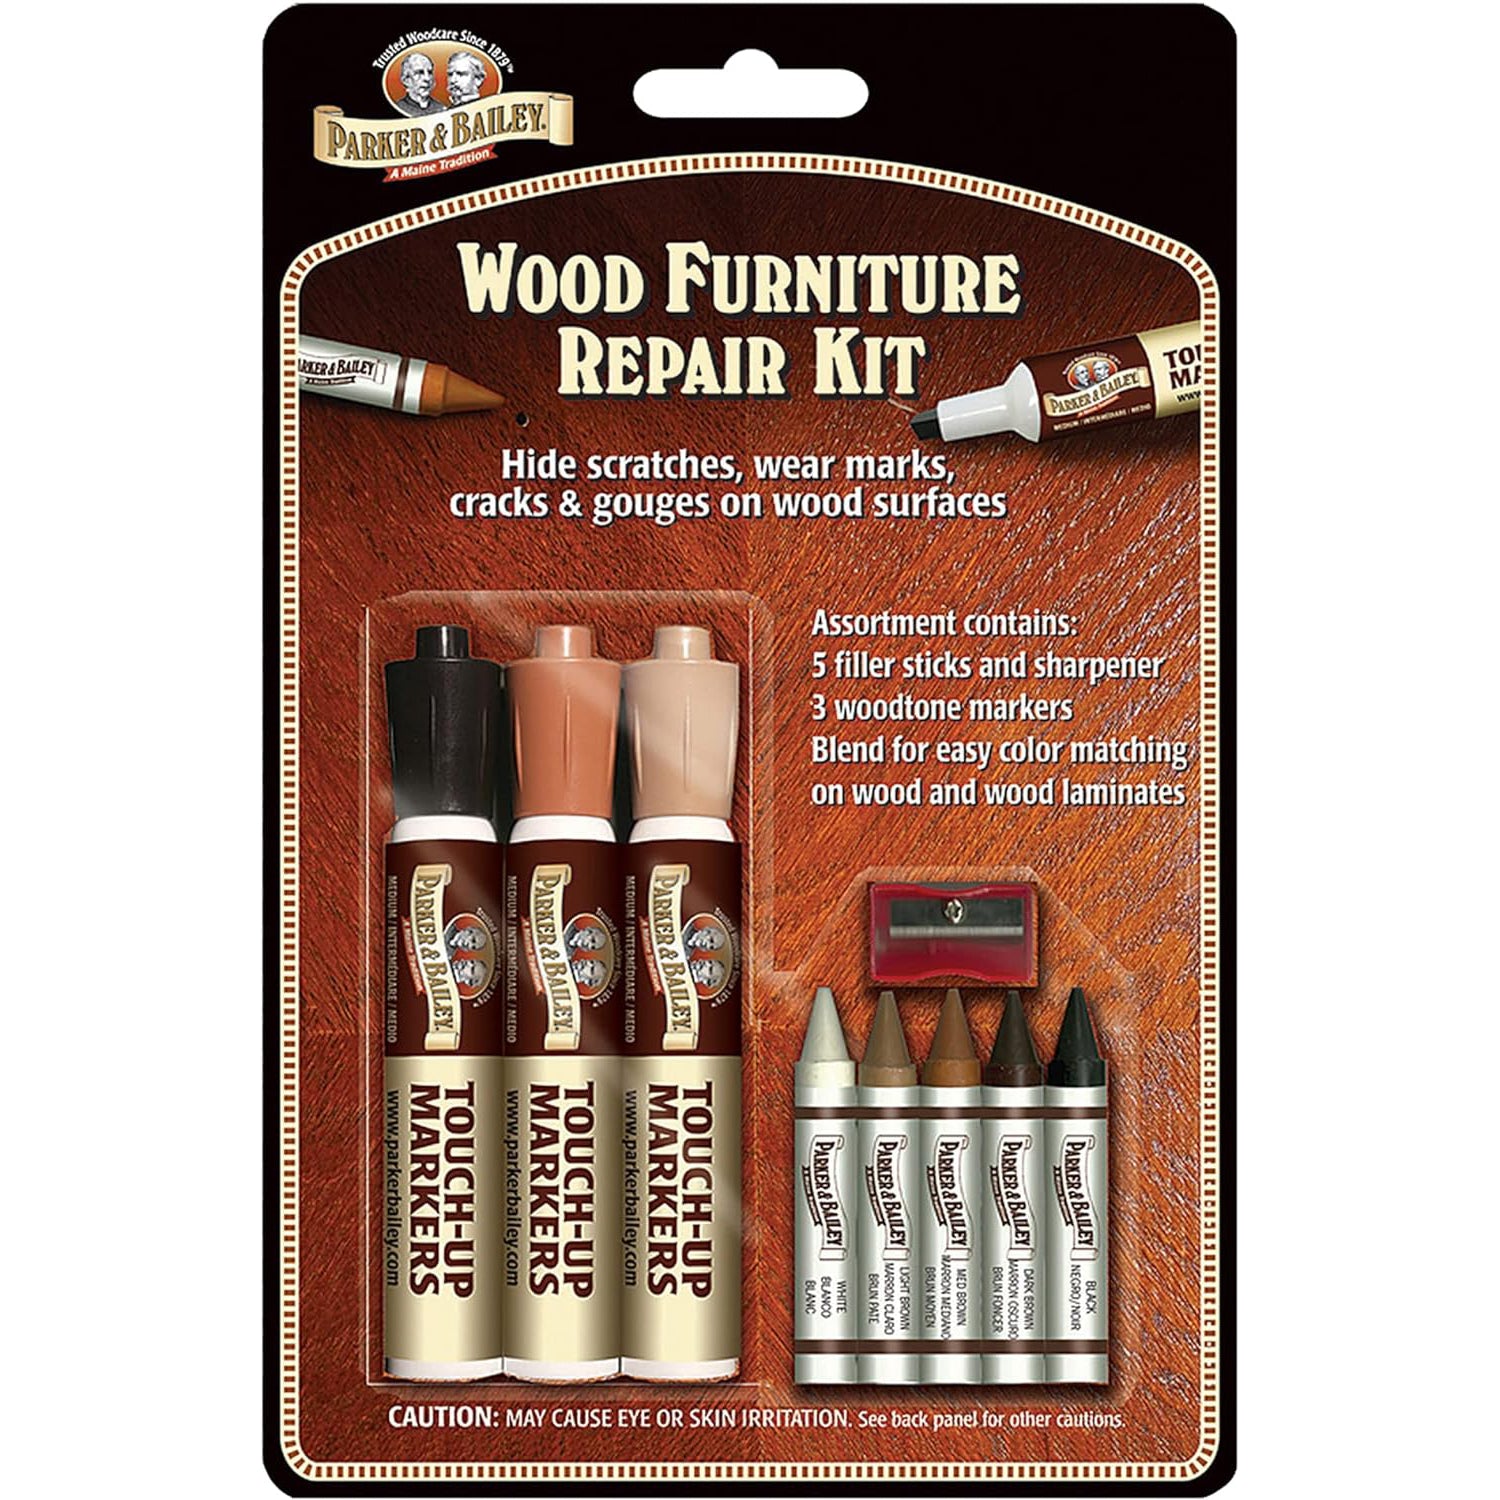 Parker & Bailey Wood Repair Kit - Furniture Markers and Scratch Repair Crayon Filler Sticks